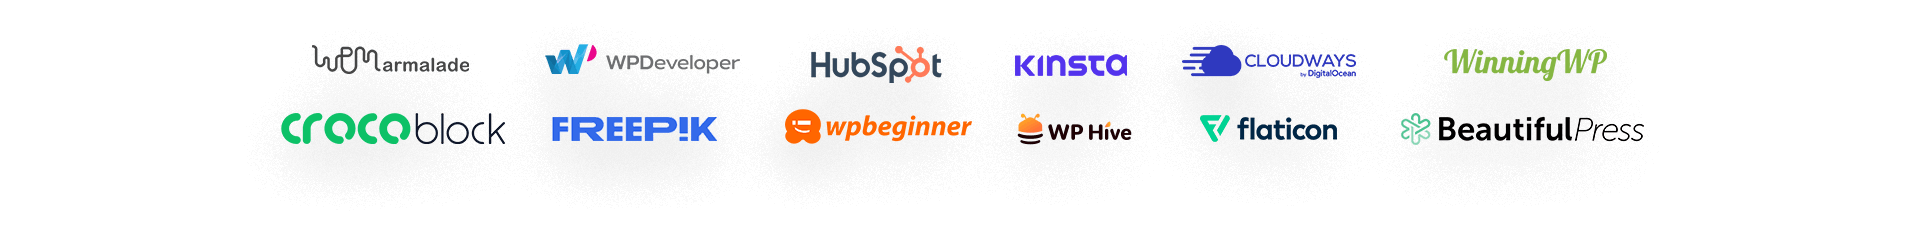 WordPress brands that trust OceanWP theme large logos display